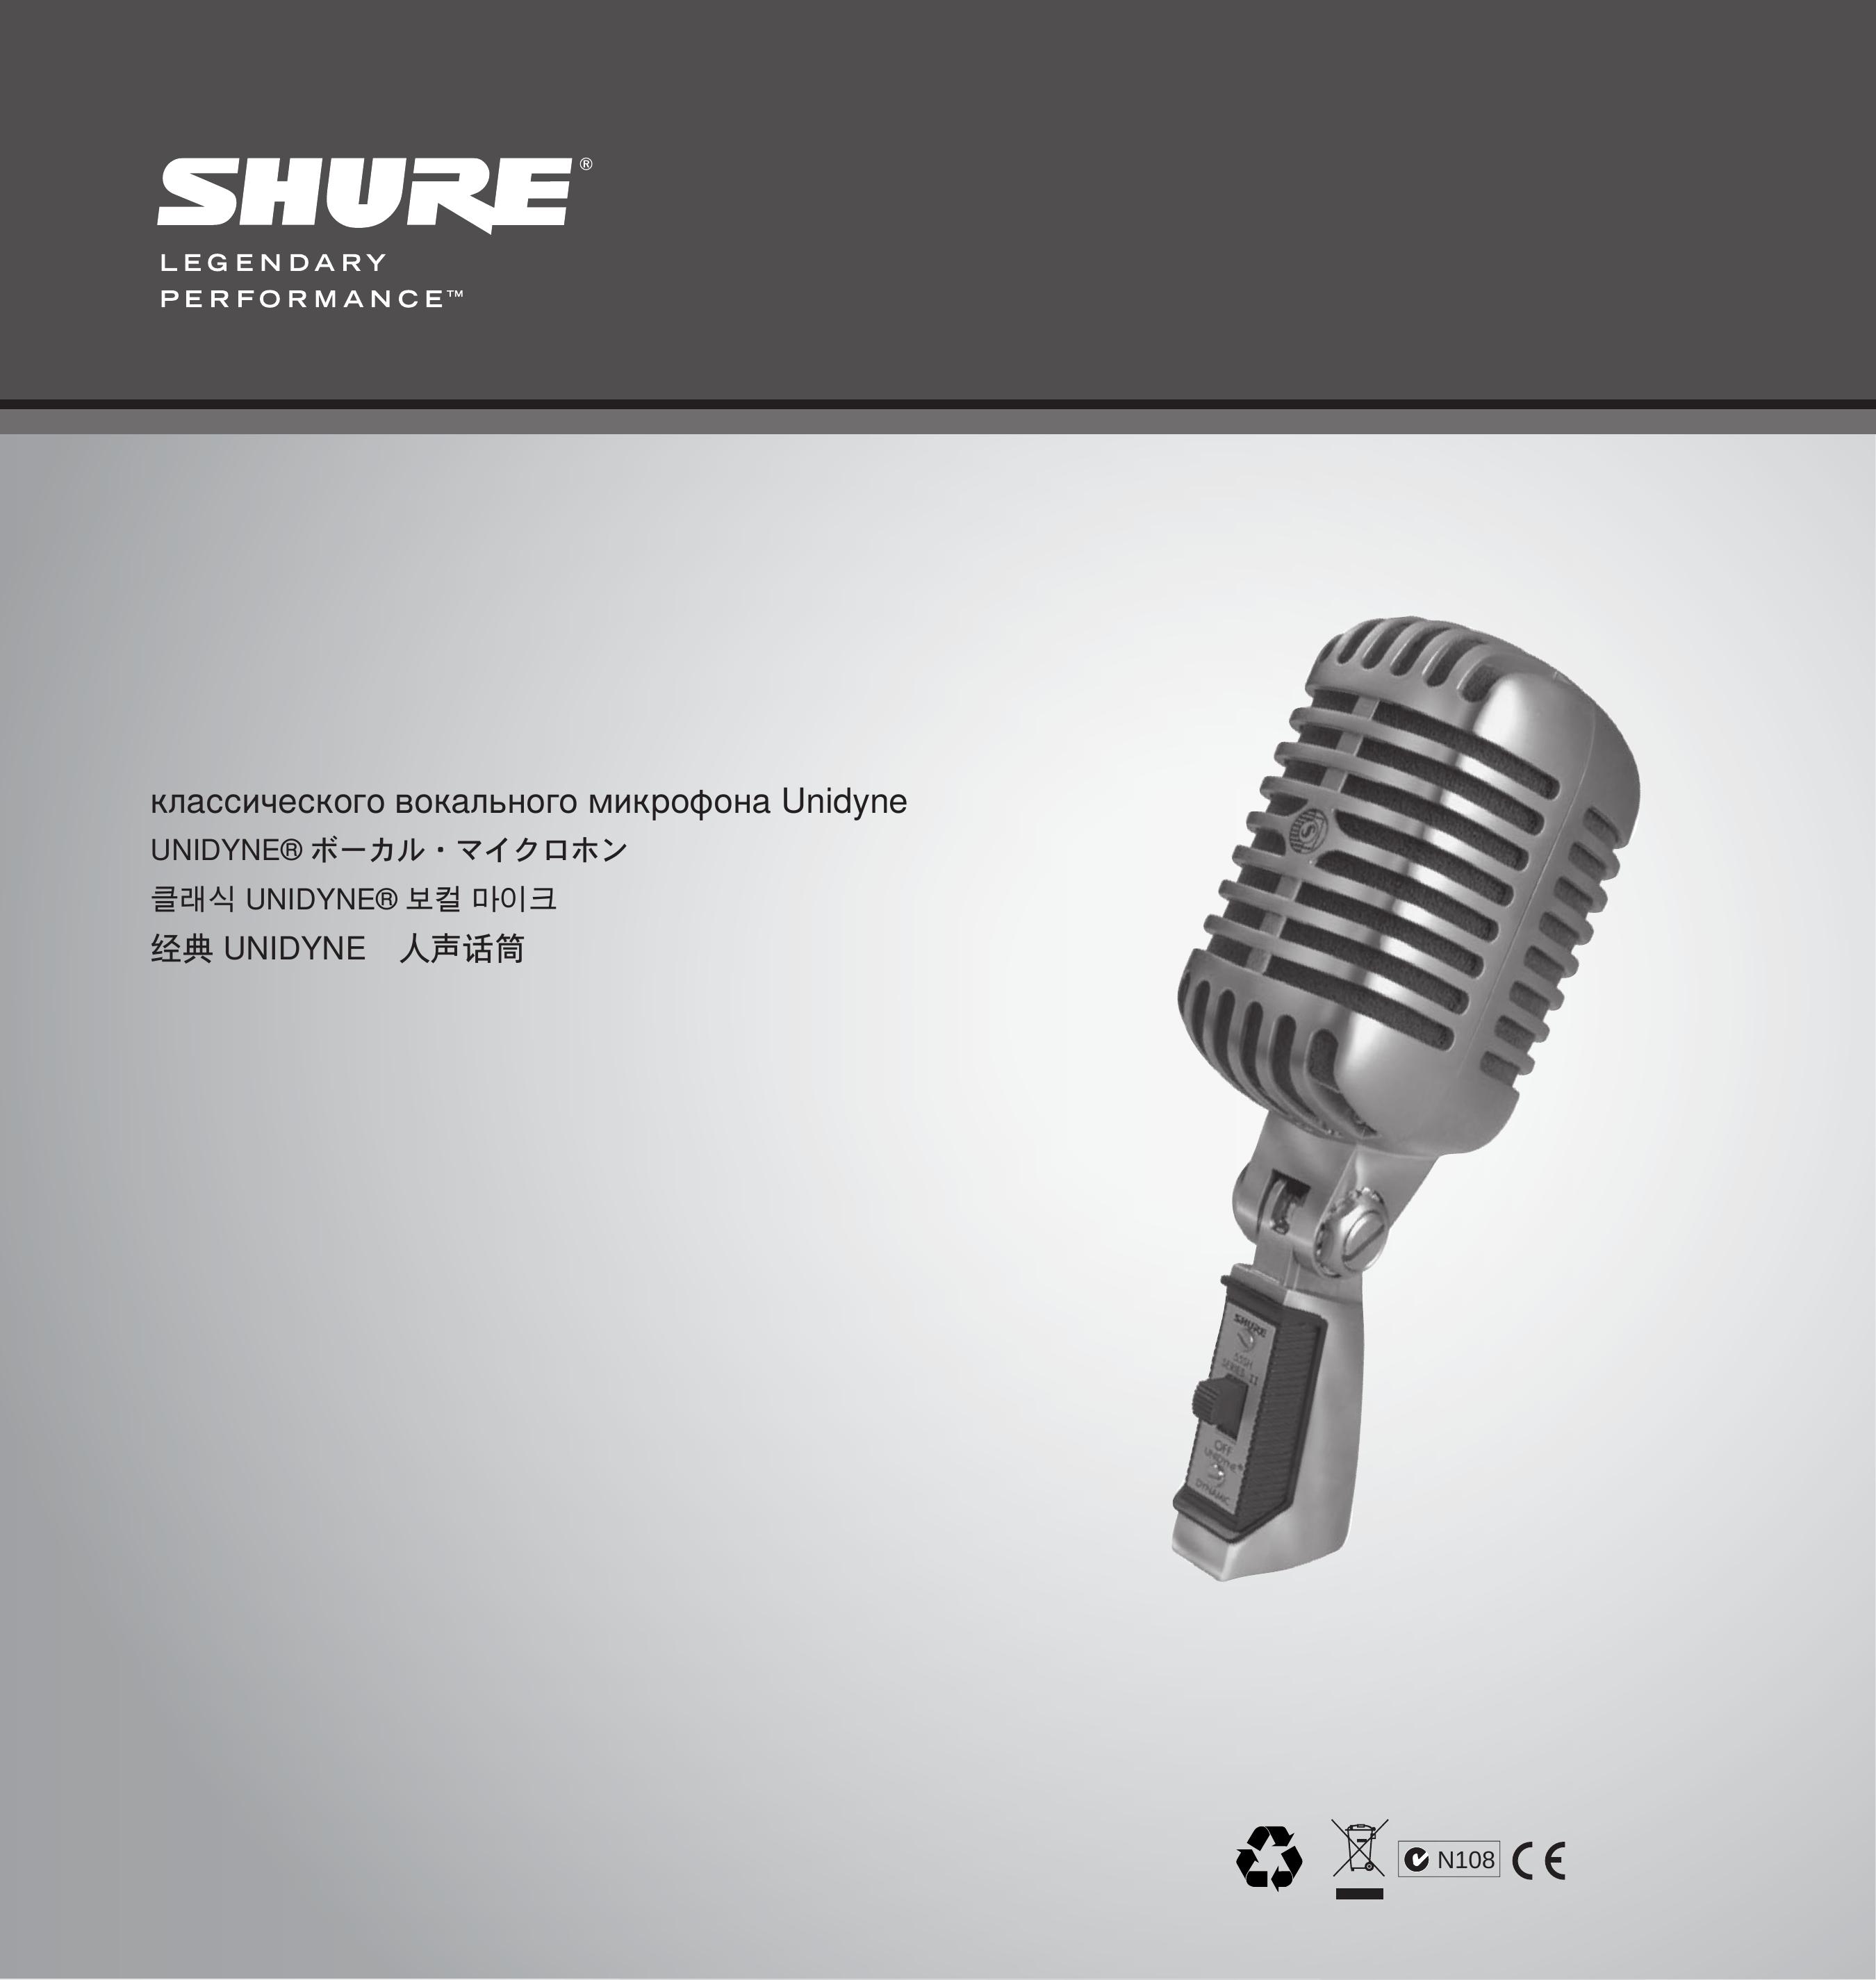 Shure 55SH Microphone User Manual